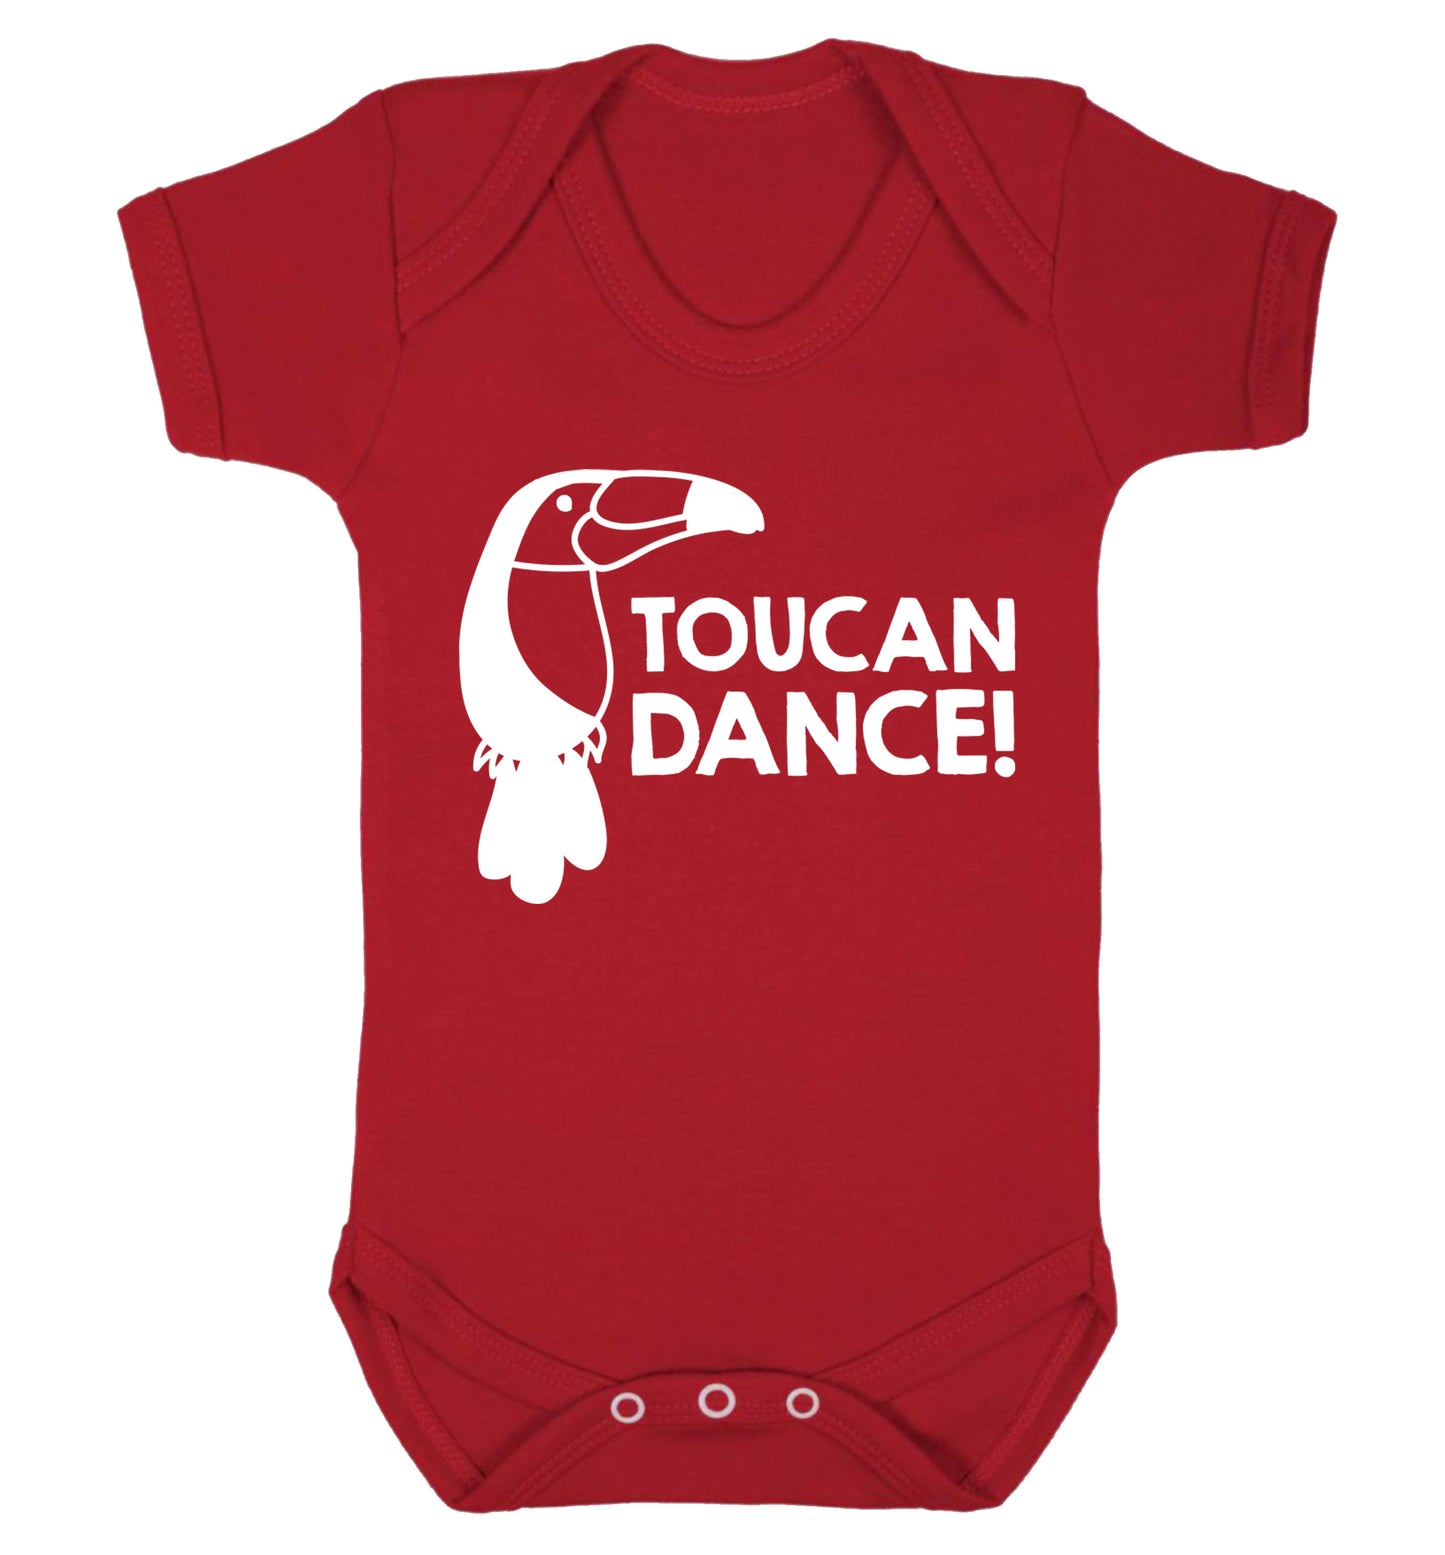 Toucan dance Baby Vest red 18-24 months